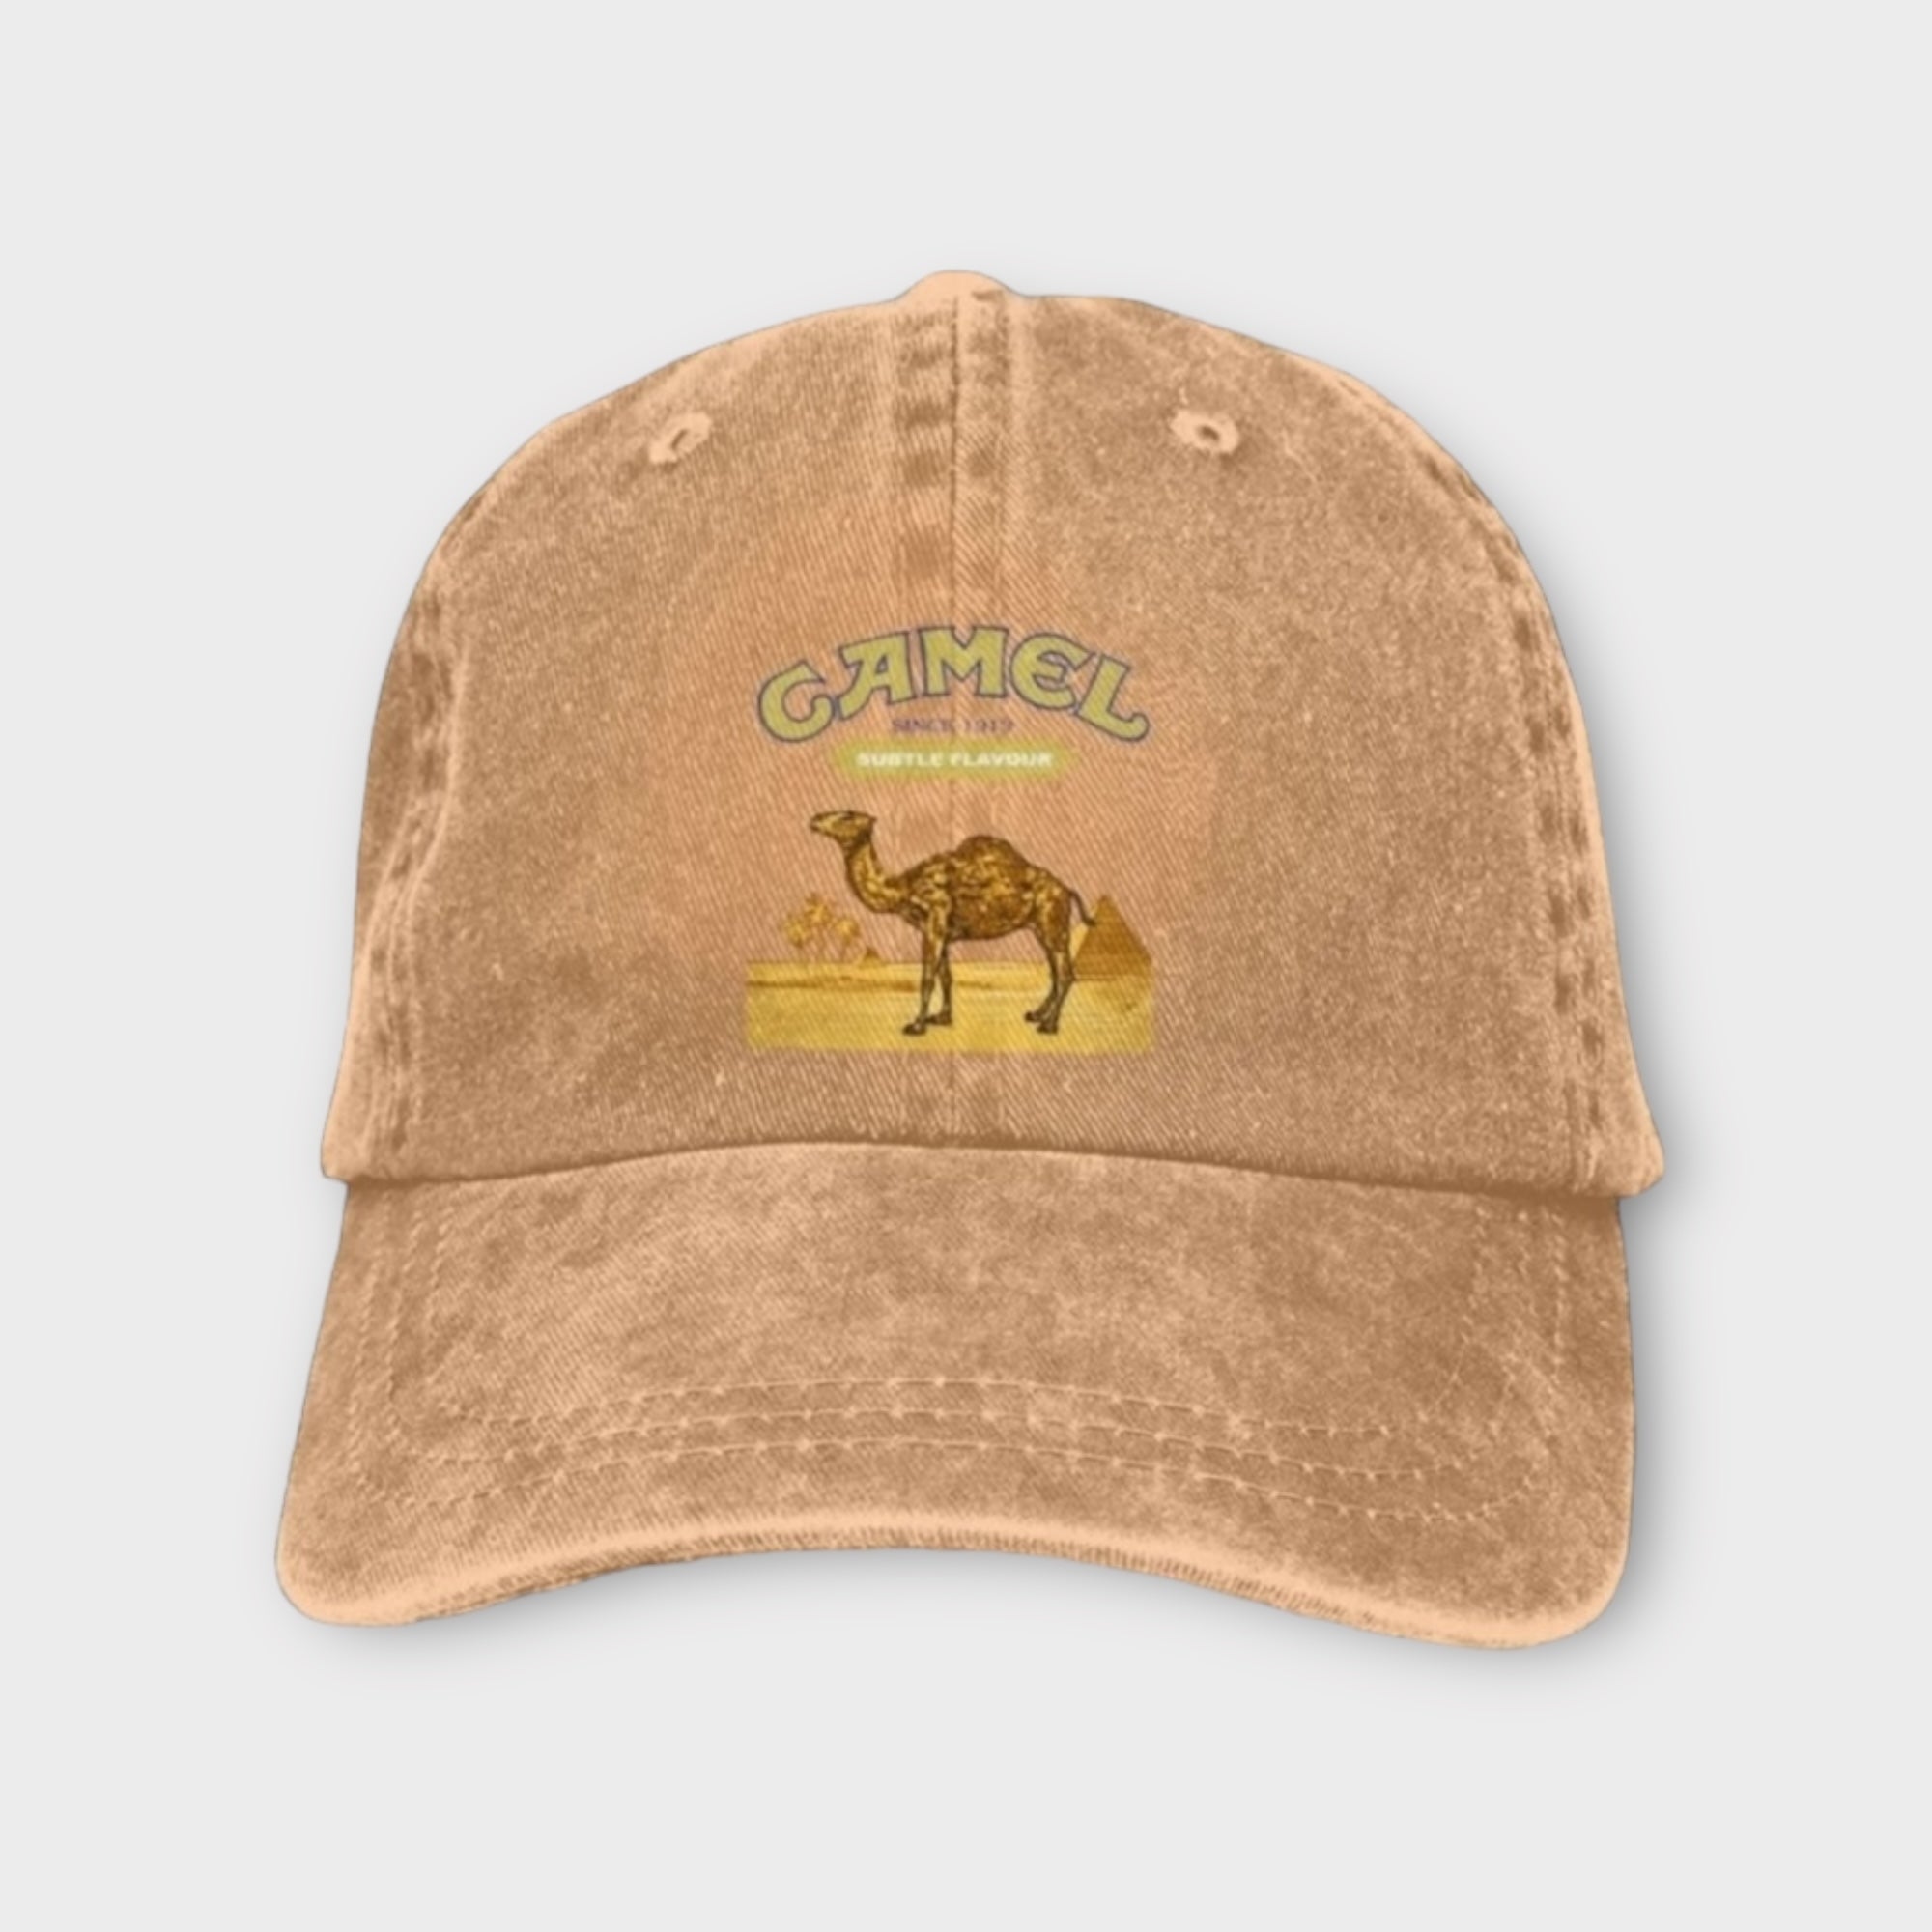 'FEJD' Camel baseball cap for men and women